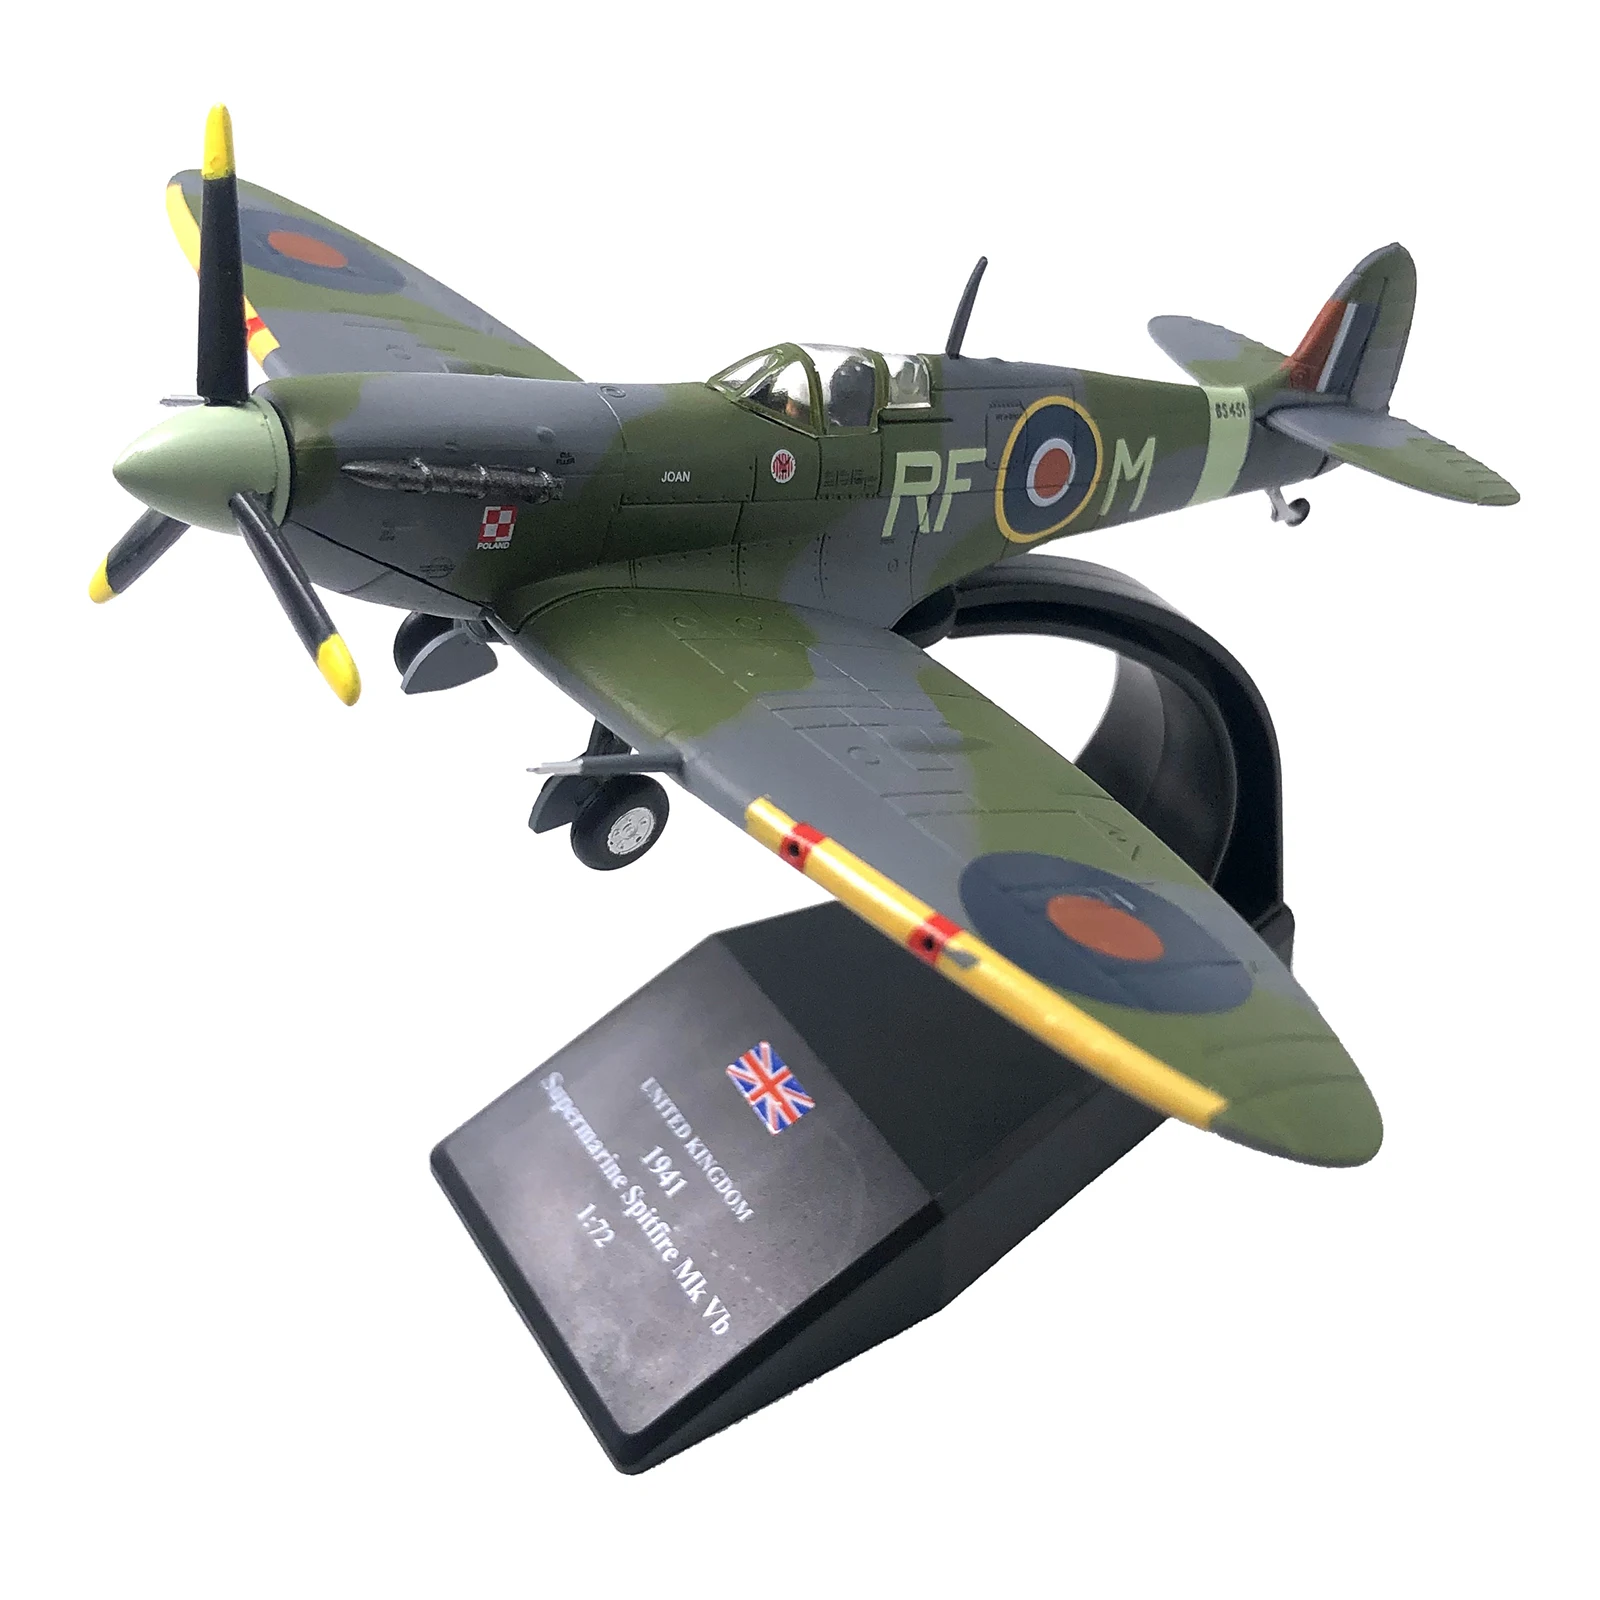 1/72 Scale WWII British Fighter Plane Airplane Diecast Metal Plane Aircraft Model Children Toy